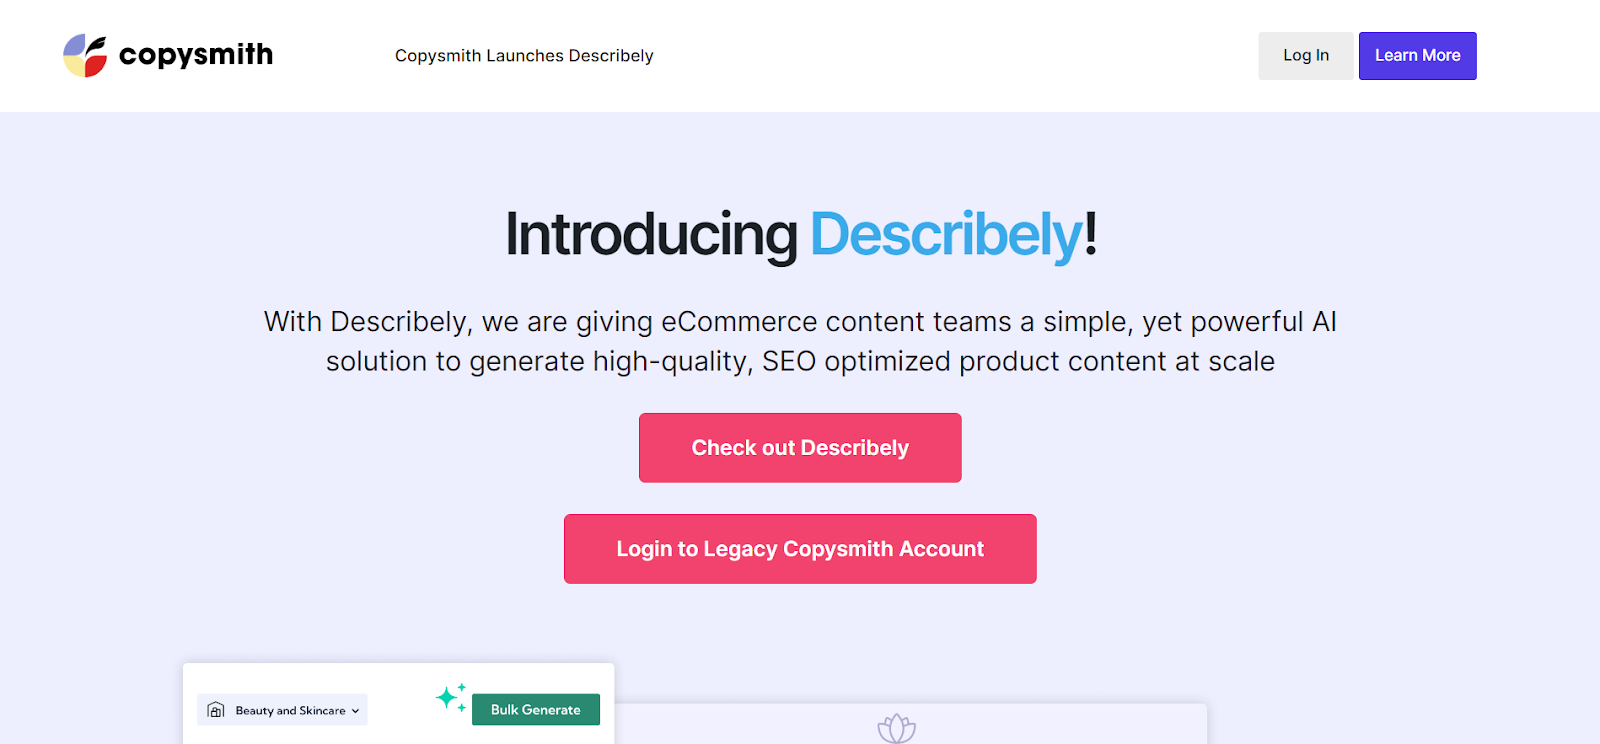 A screenshot of copysmith's website